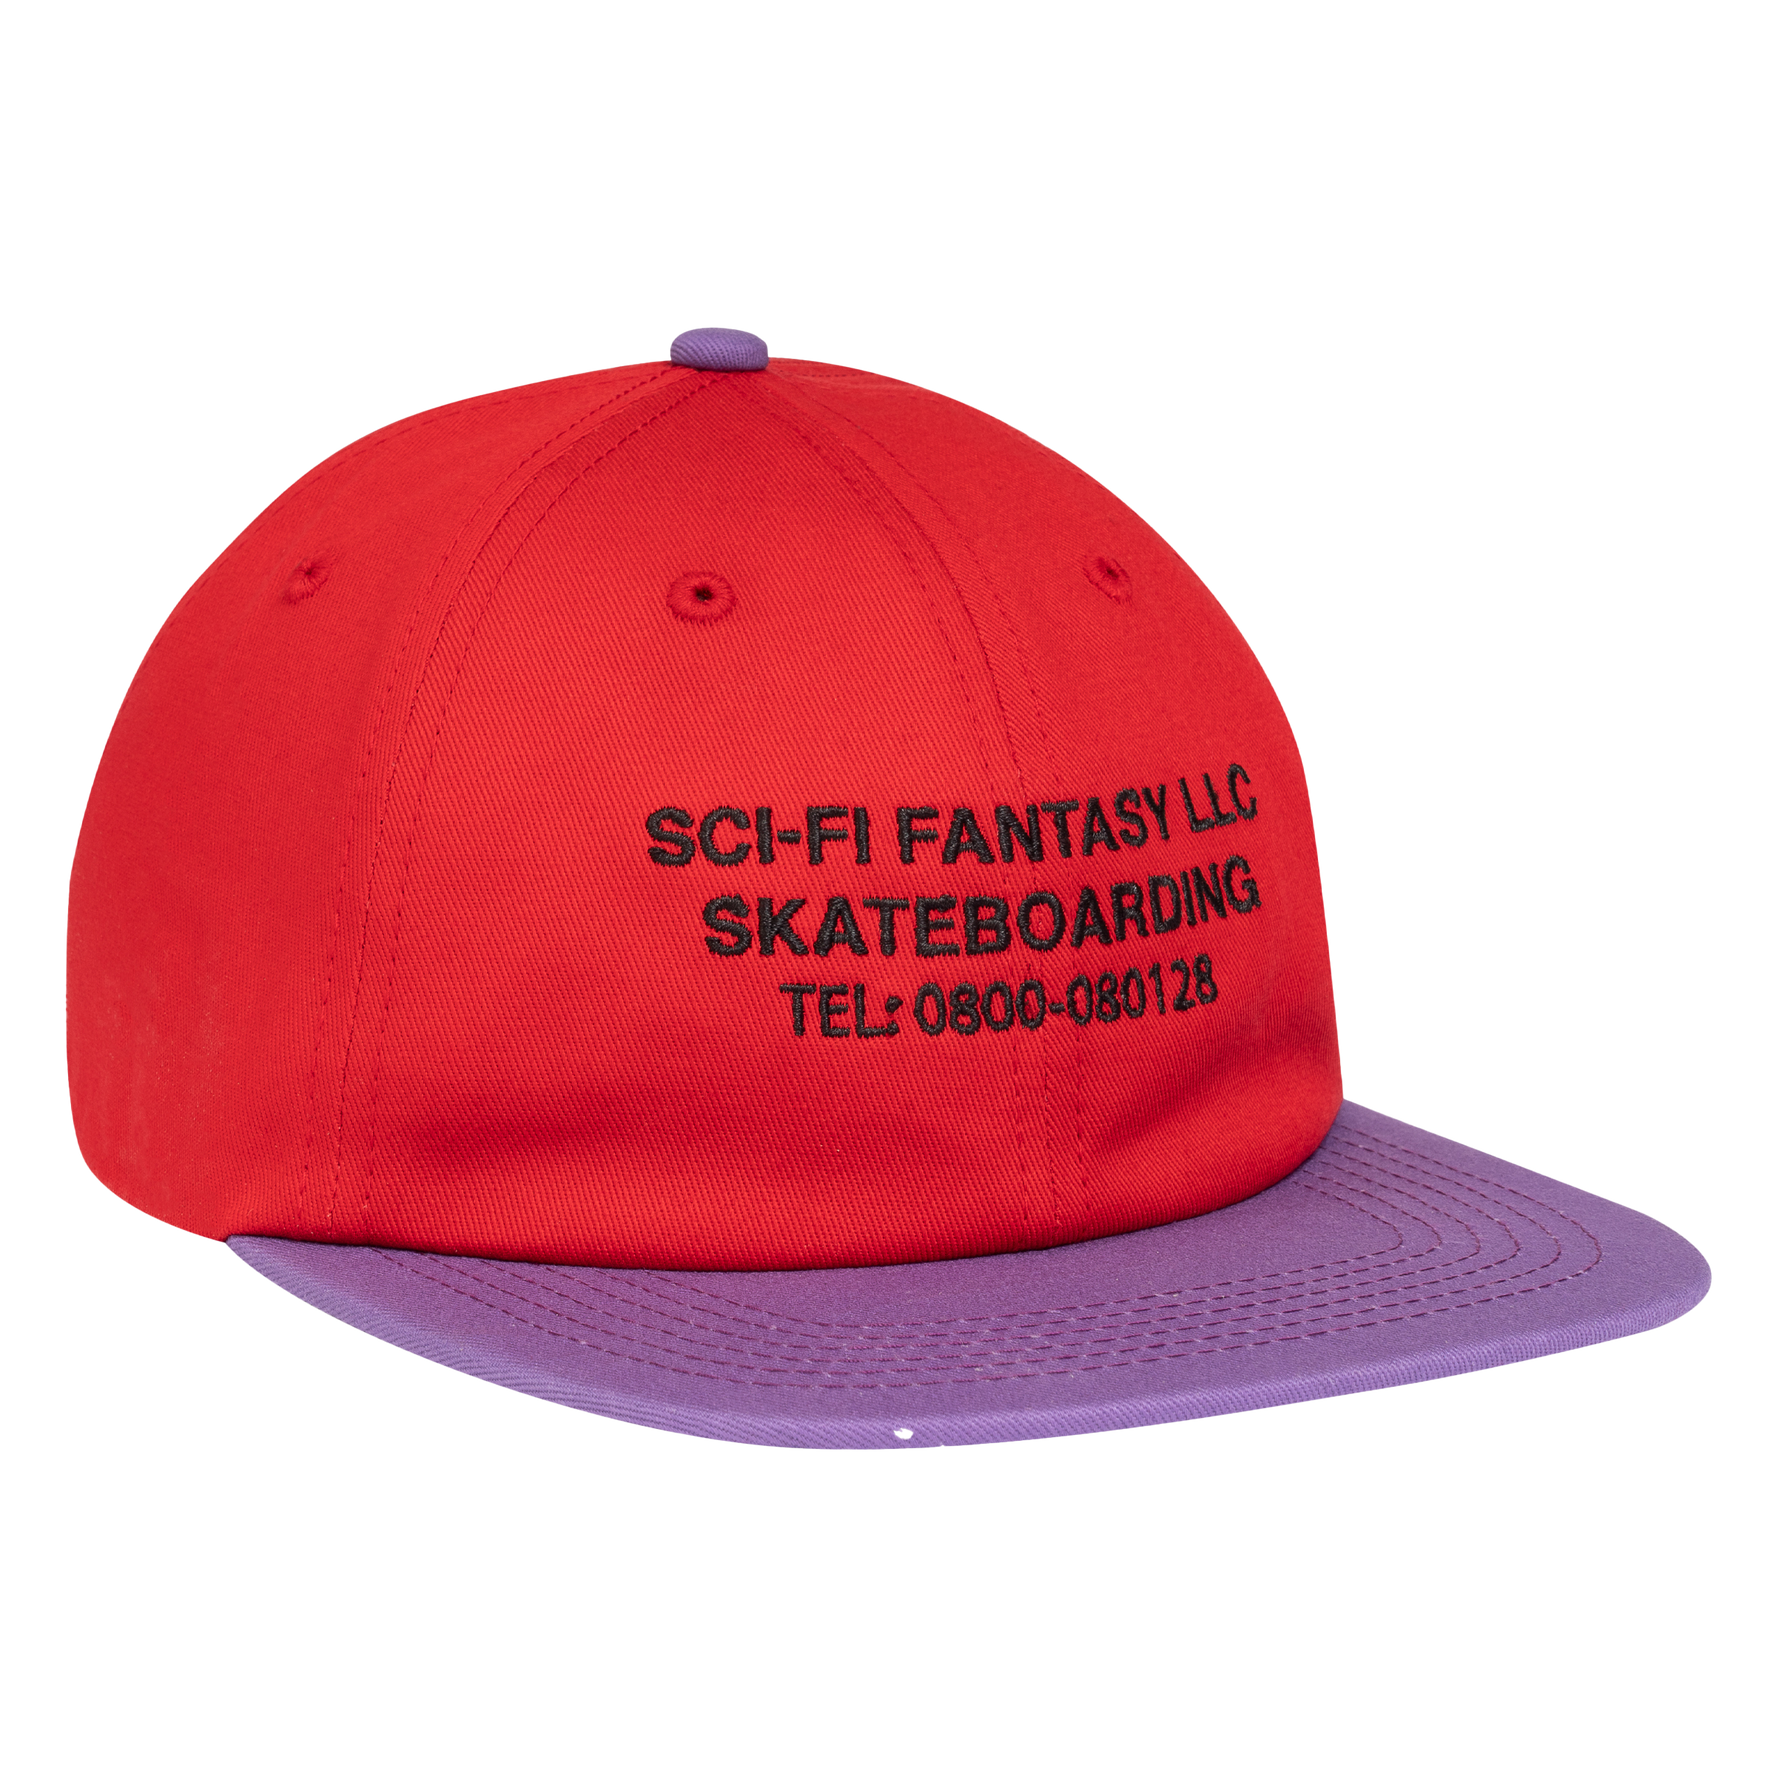 Sci-Fi Fantasy Business Post Hat  Red/Violet